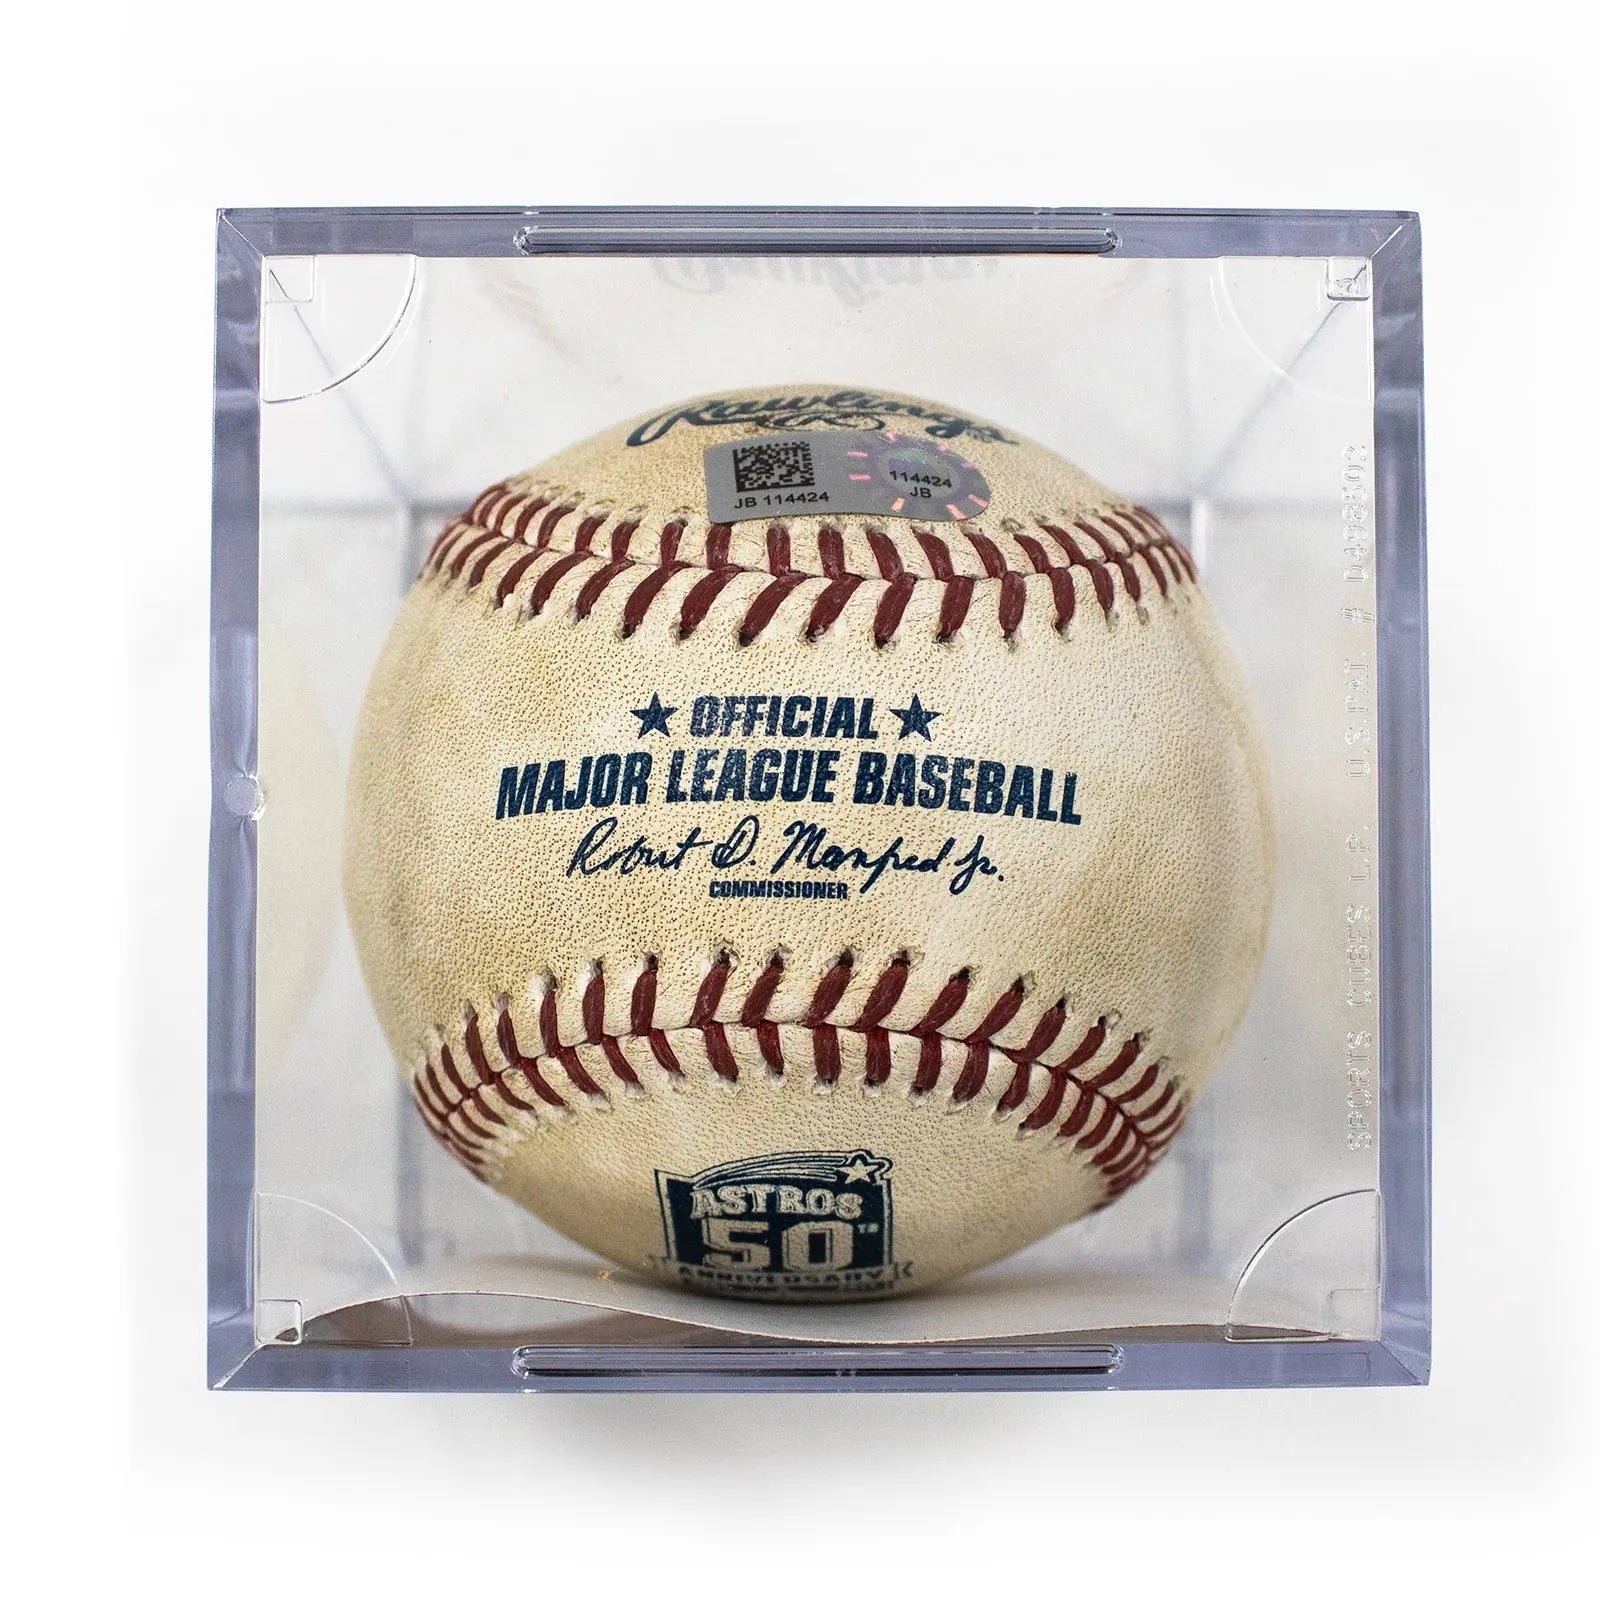 2015 MLB Houston Astros 50th Anniversary Authentic Game Baseball McHugh to Fielder 